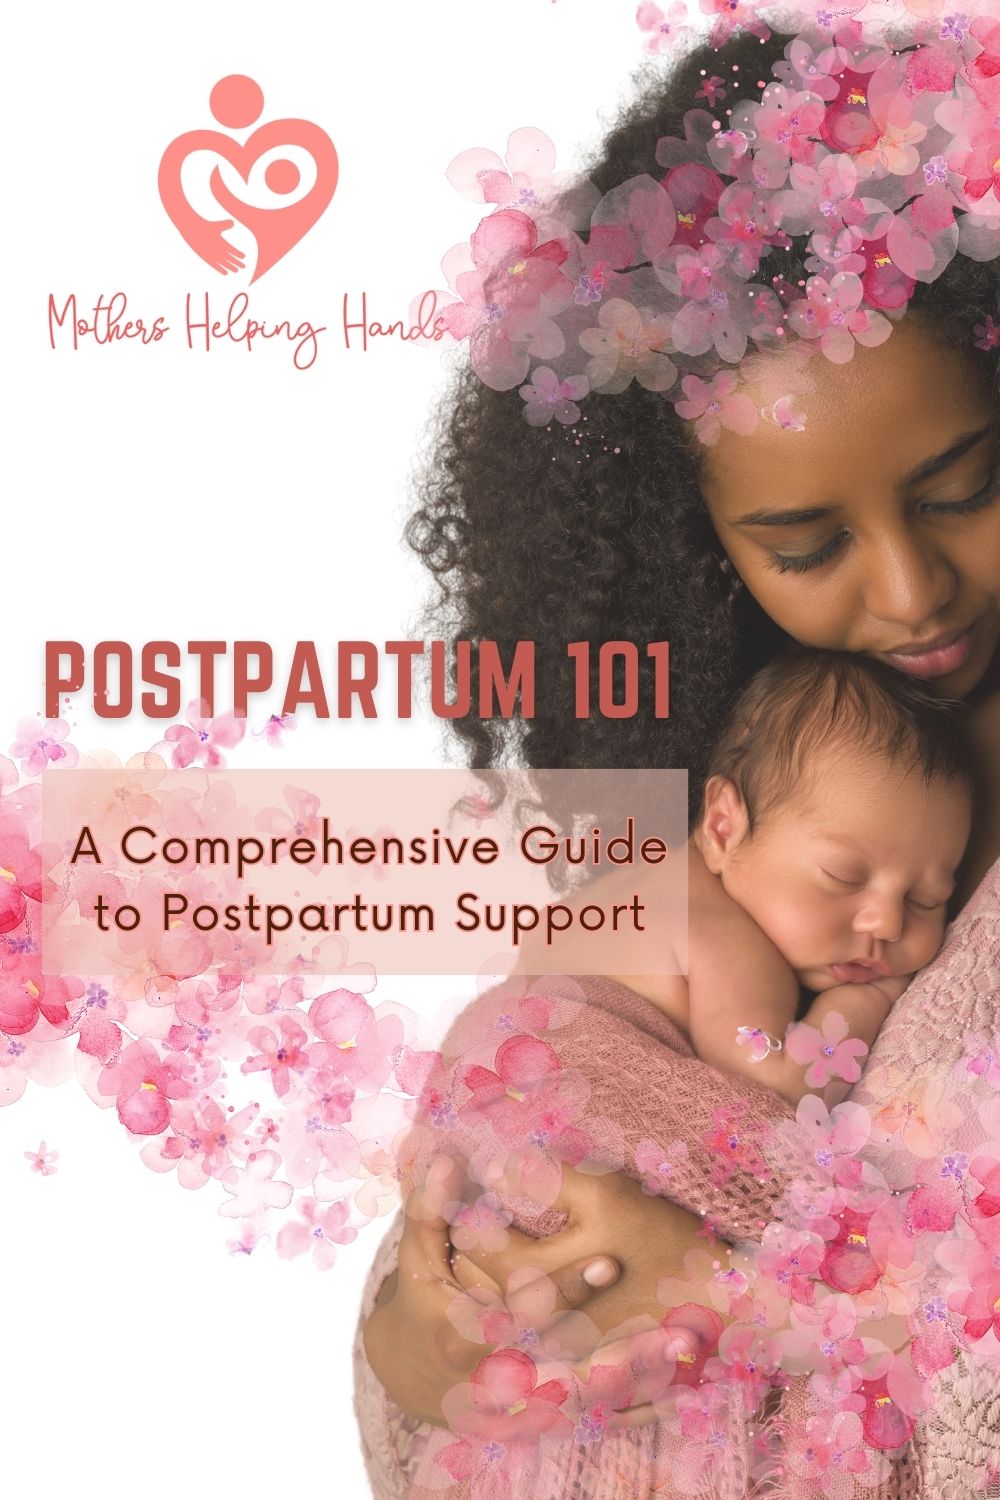 Postpartum 101 A Comprehensive Guide to Postpartum Support.